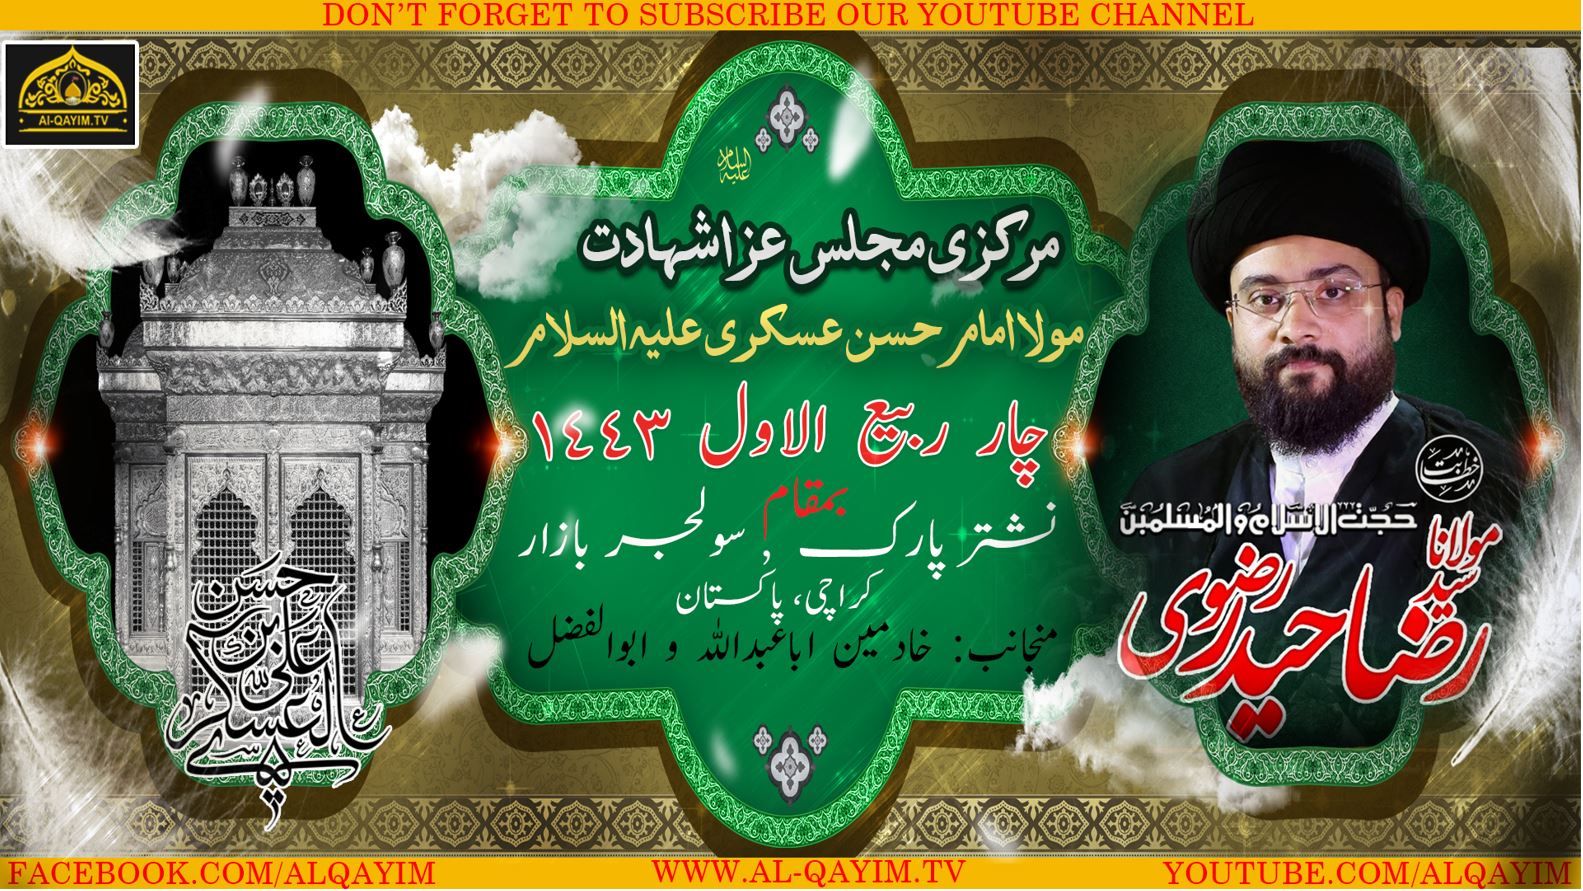 Majlis | Moulana Raza Haider Rizvi | 4th Rabi Awal 1443/2021 - Nishtar Park Solider Bazar - Karachi